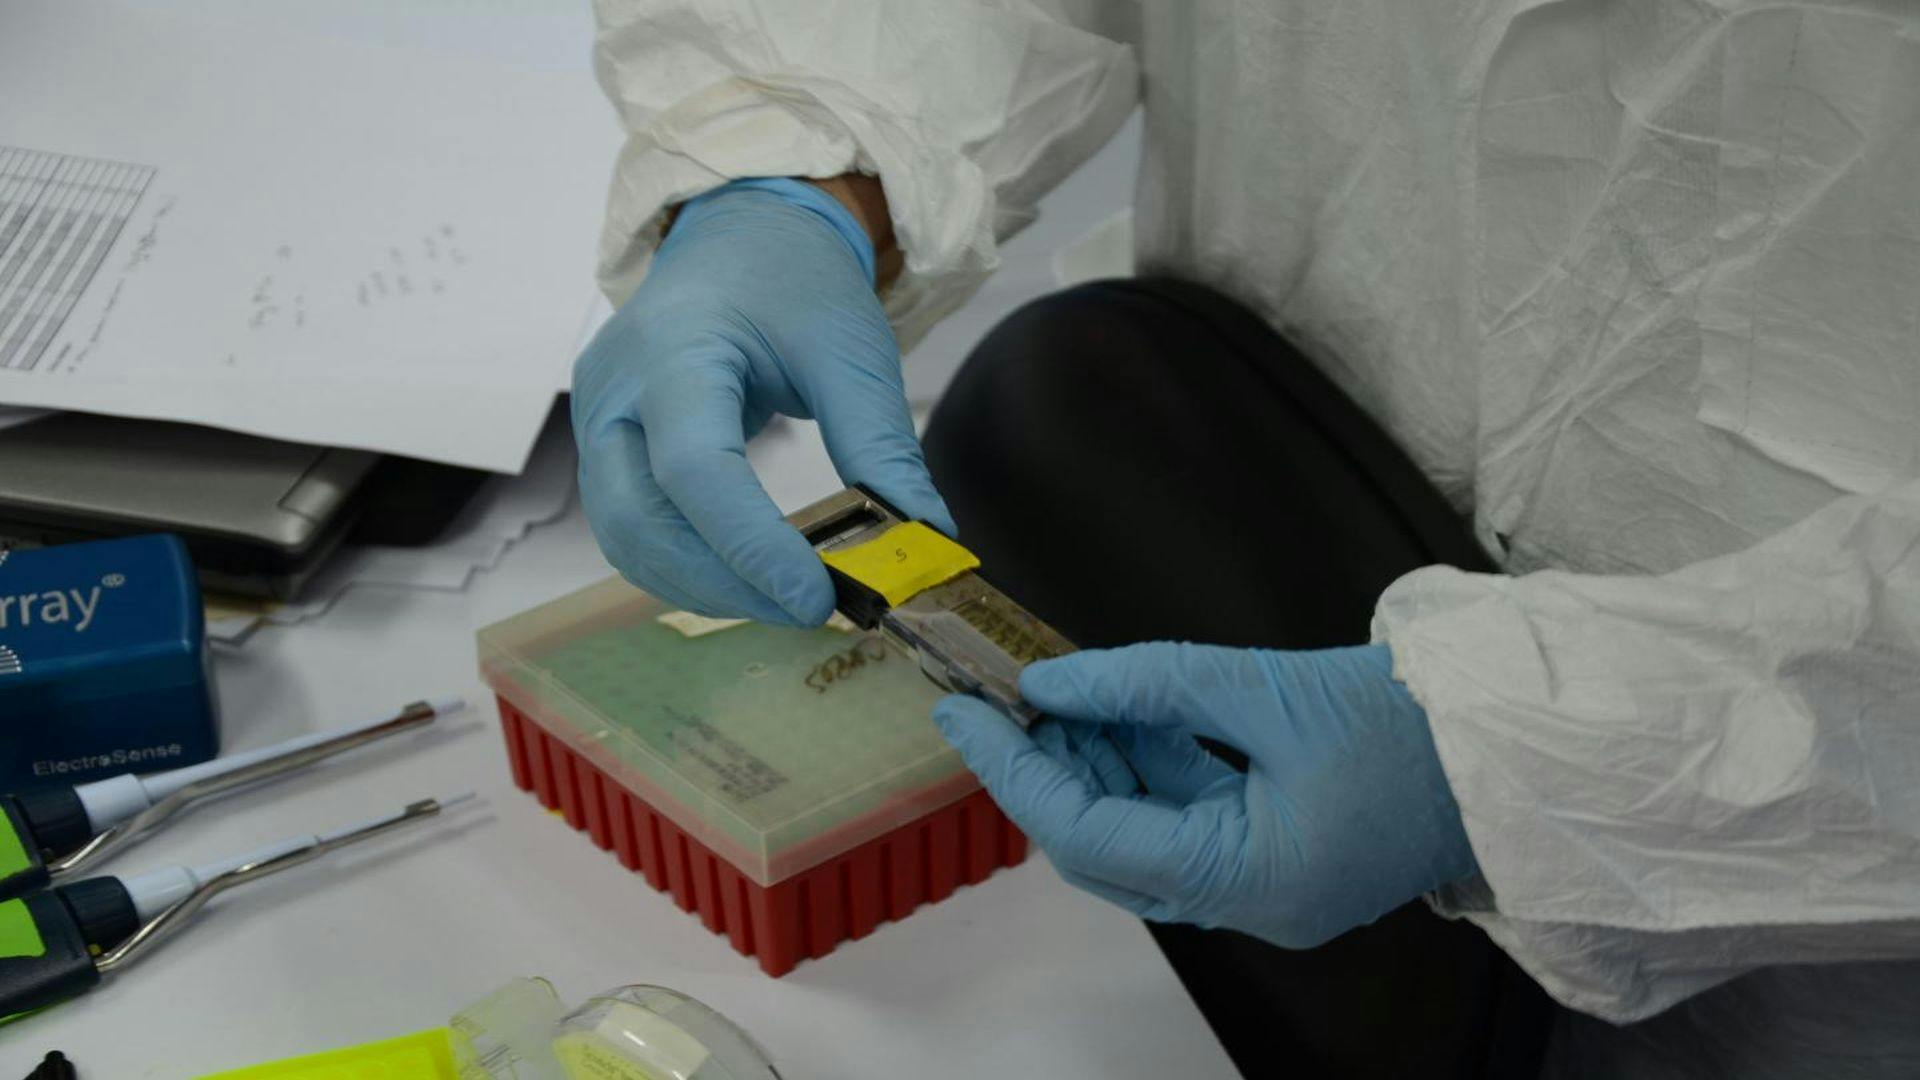 NRL Scientists Find High Prevalence of Antibiotic Resistance in Kenya